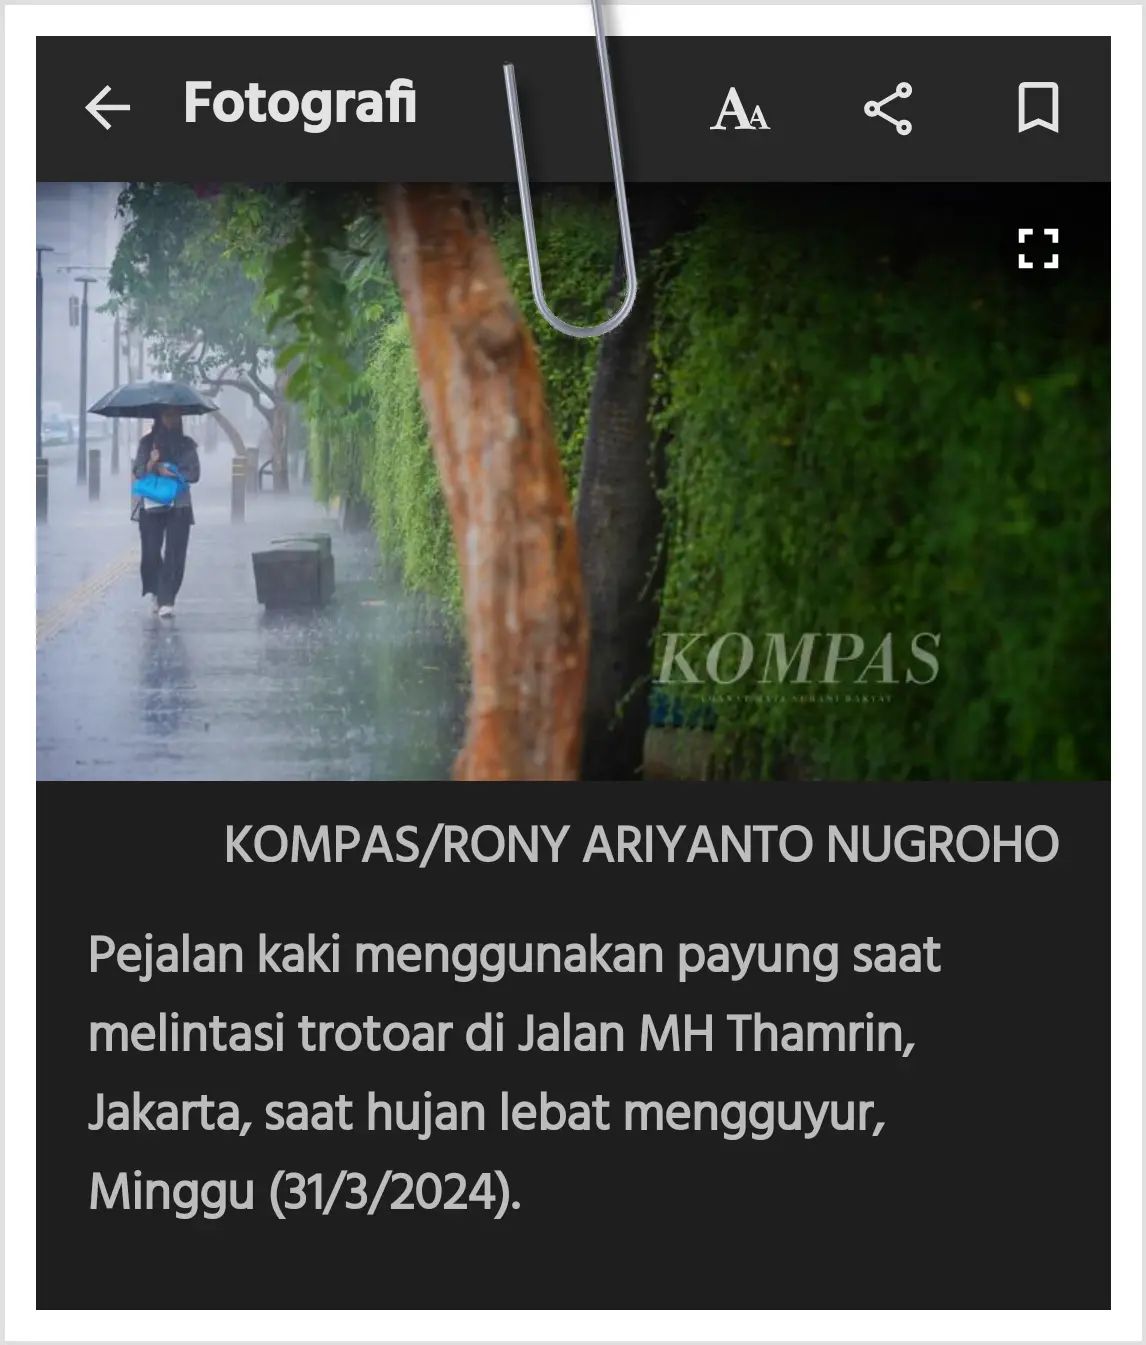 Jakarta hujan dalam foto jurnalistik Kompas 